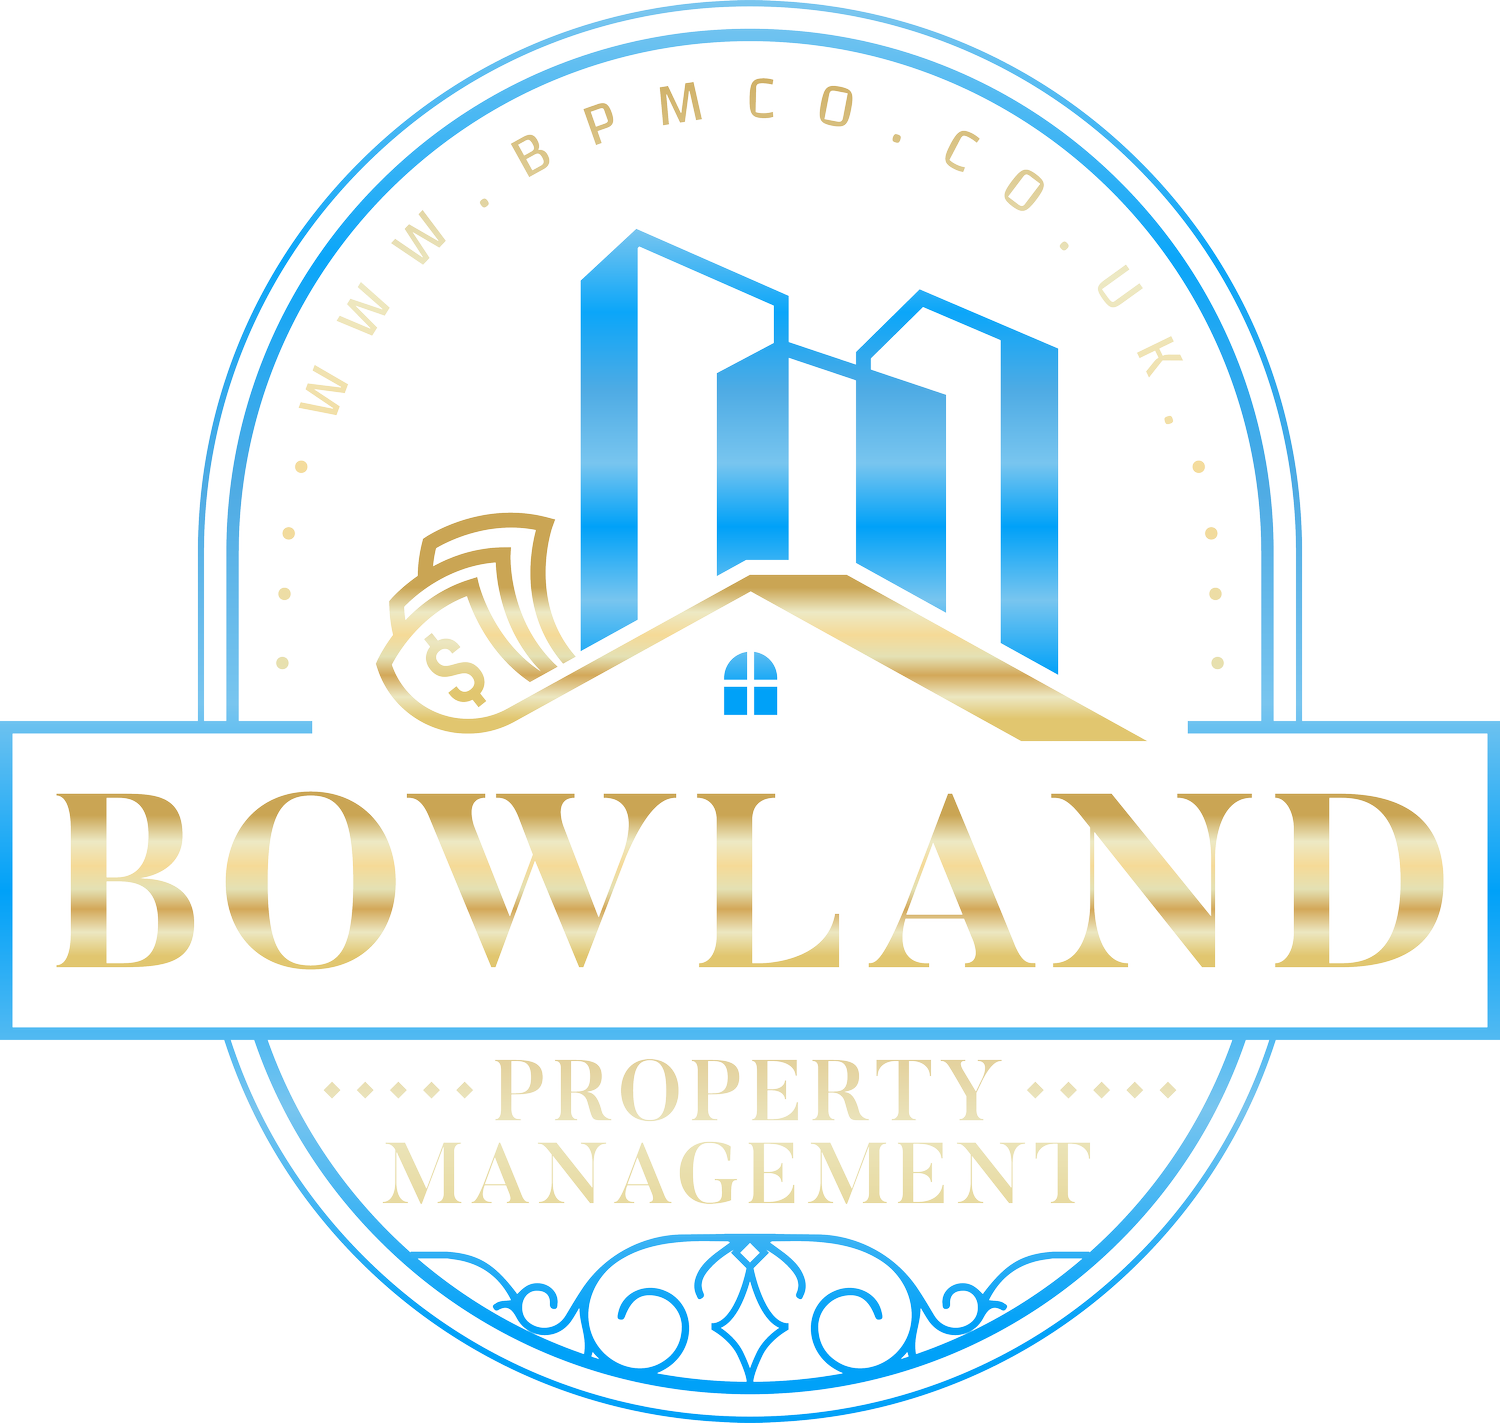 Bowland Property Management